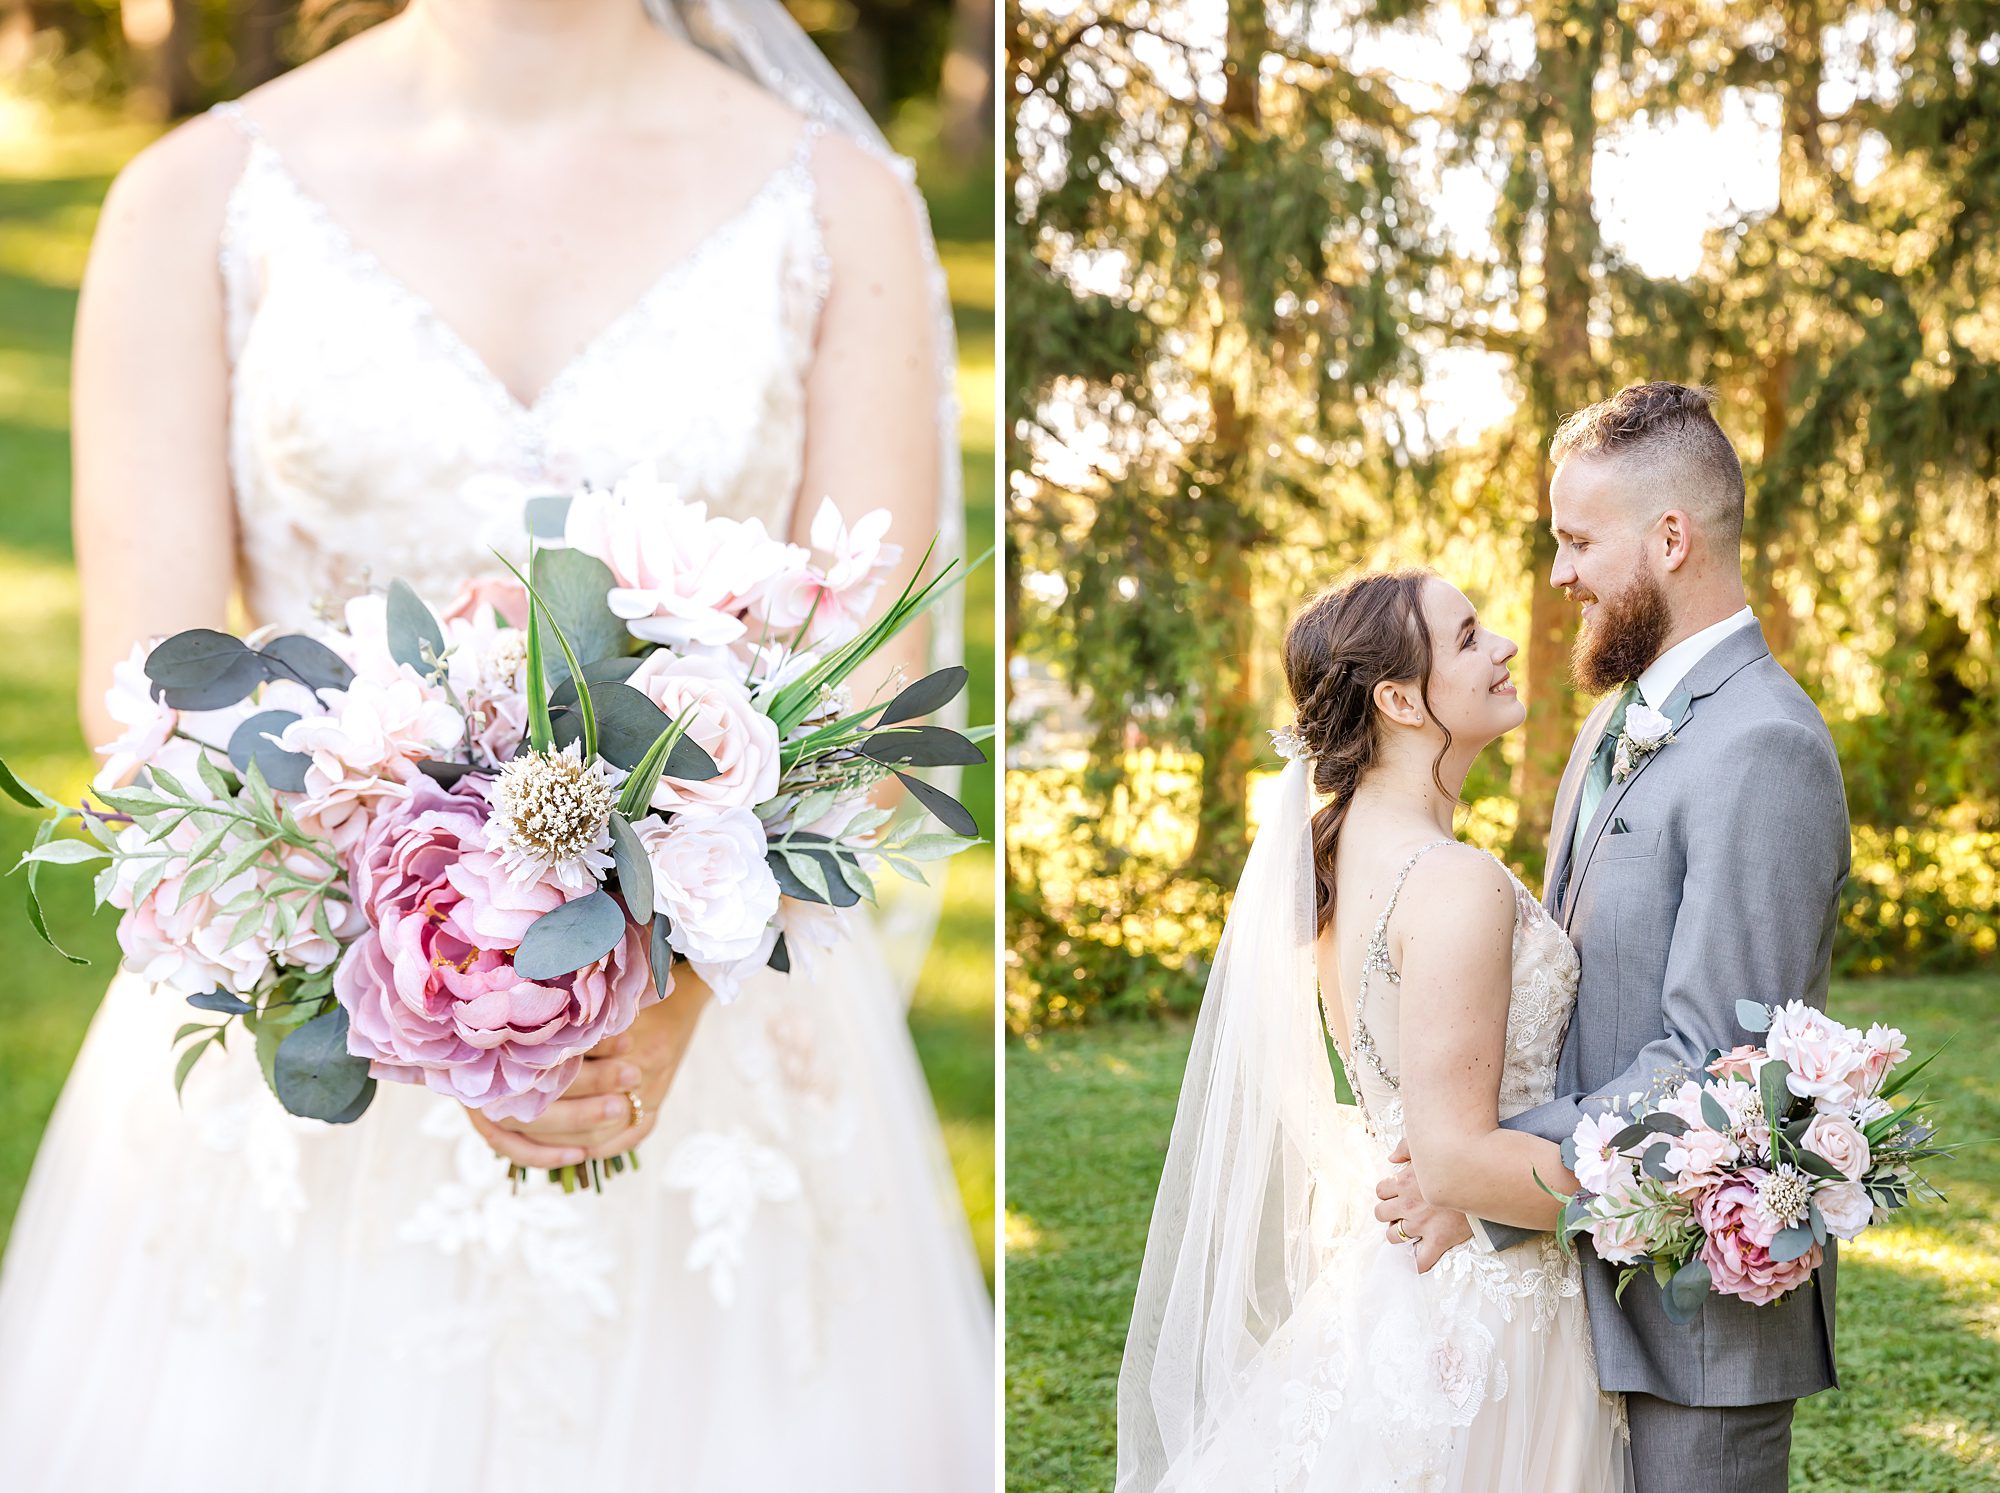 bride and groom portraits - ottawa wedding photographer